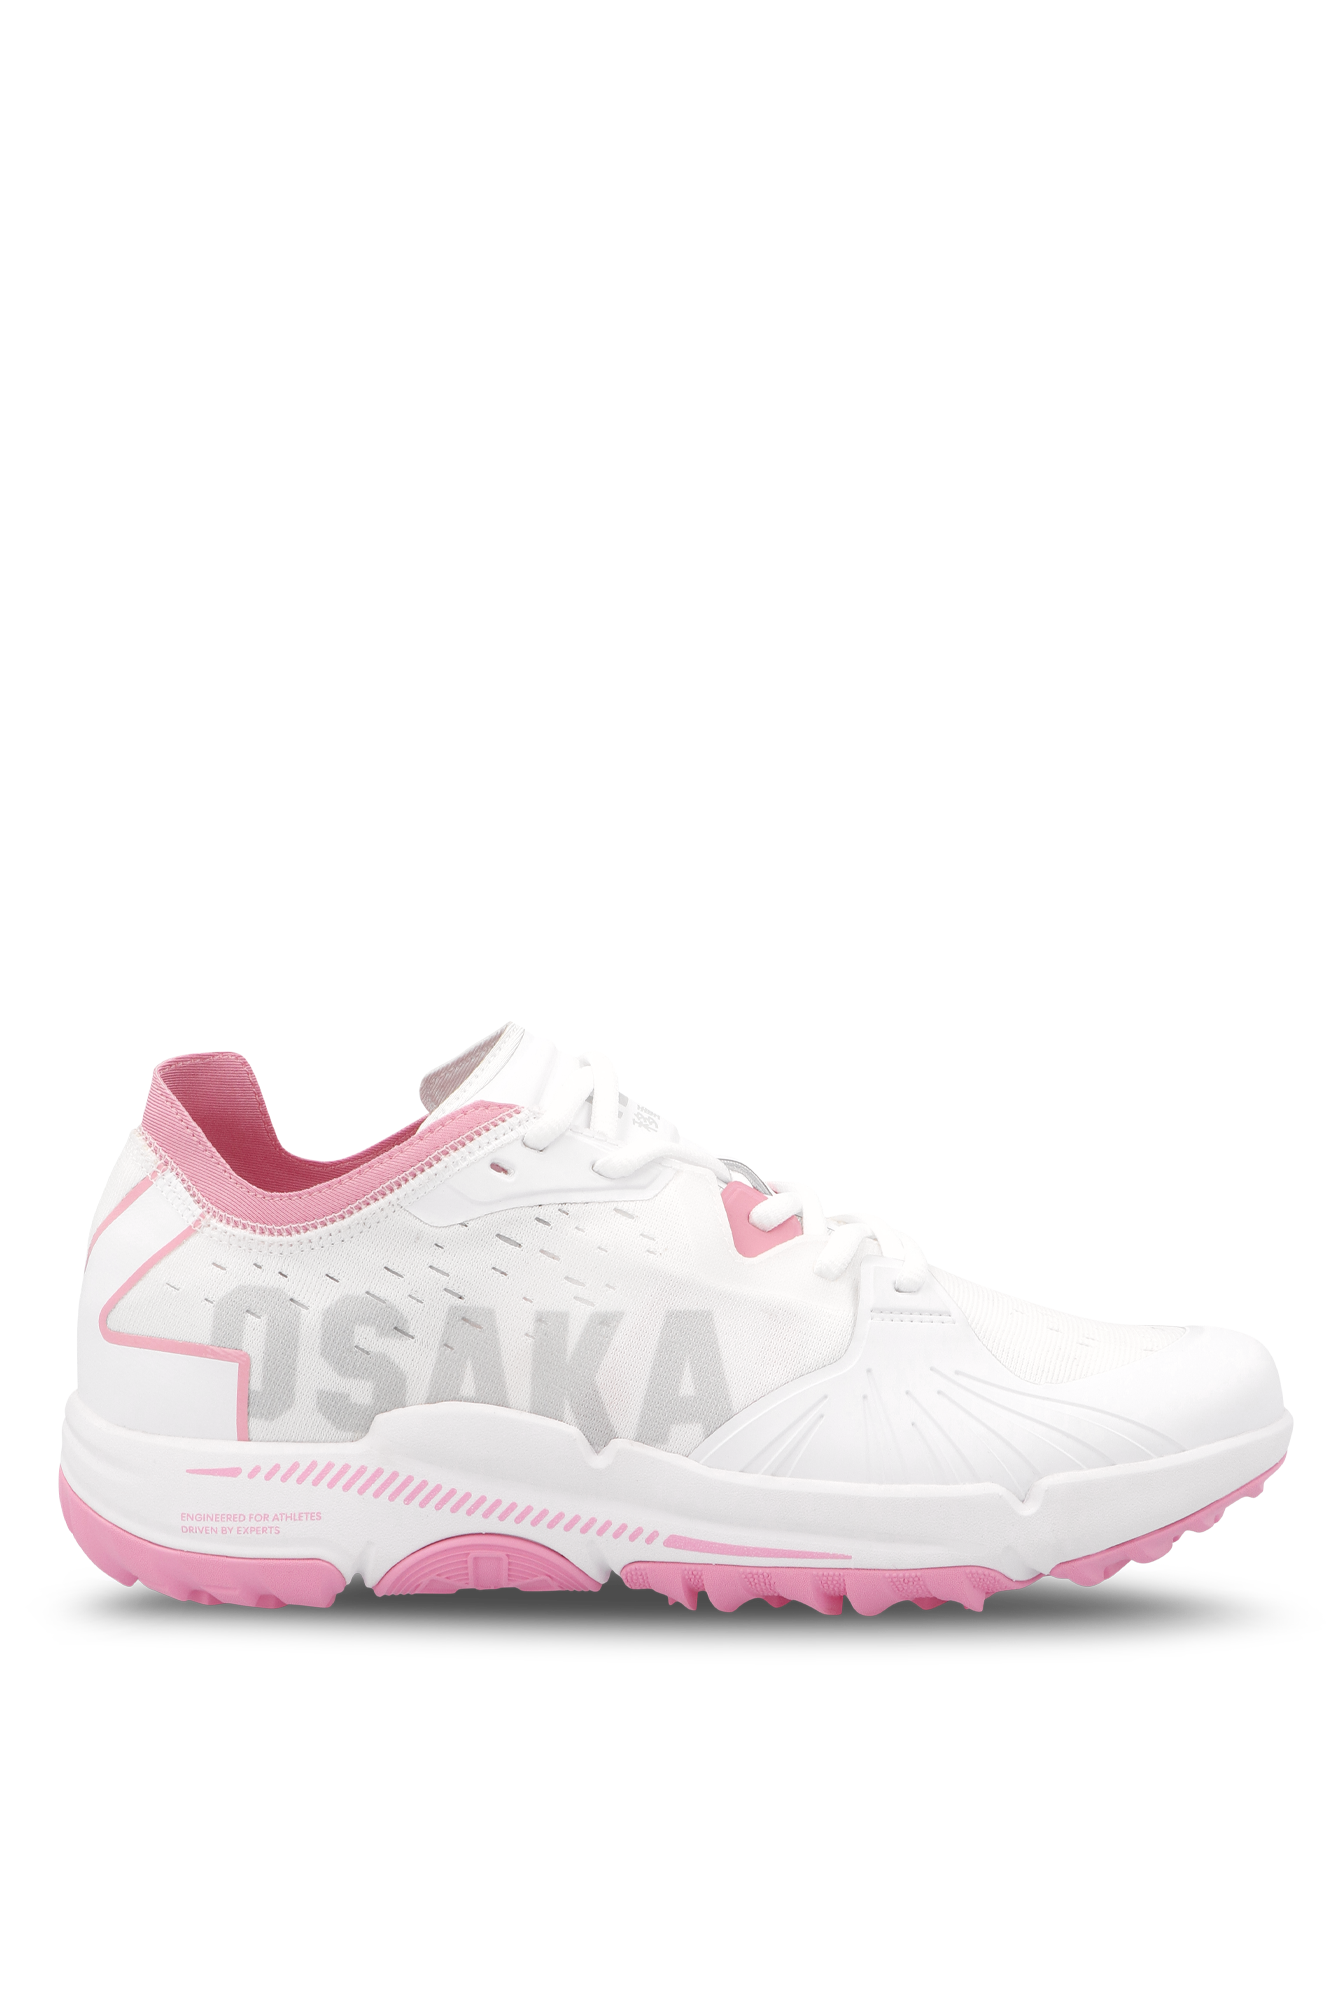 Osaka IDO MK1 White/Pink Hockey Shoe-ONE Sports Warehouse